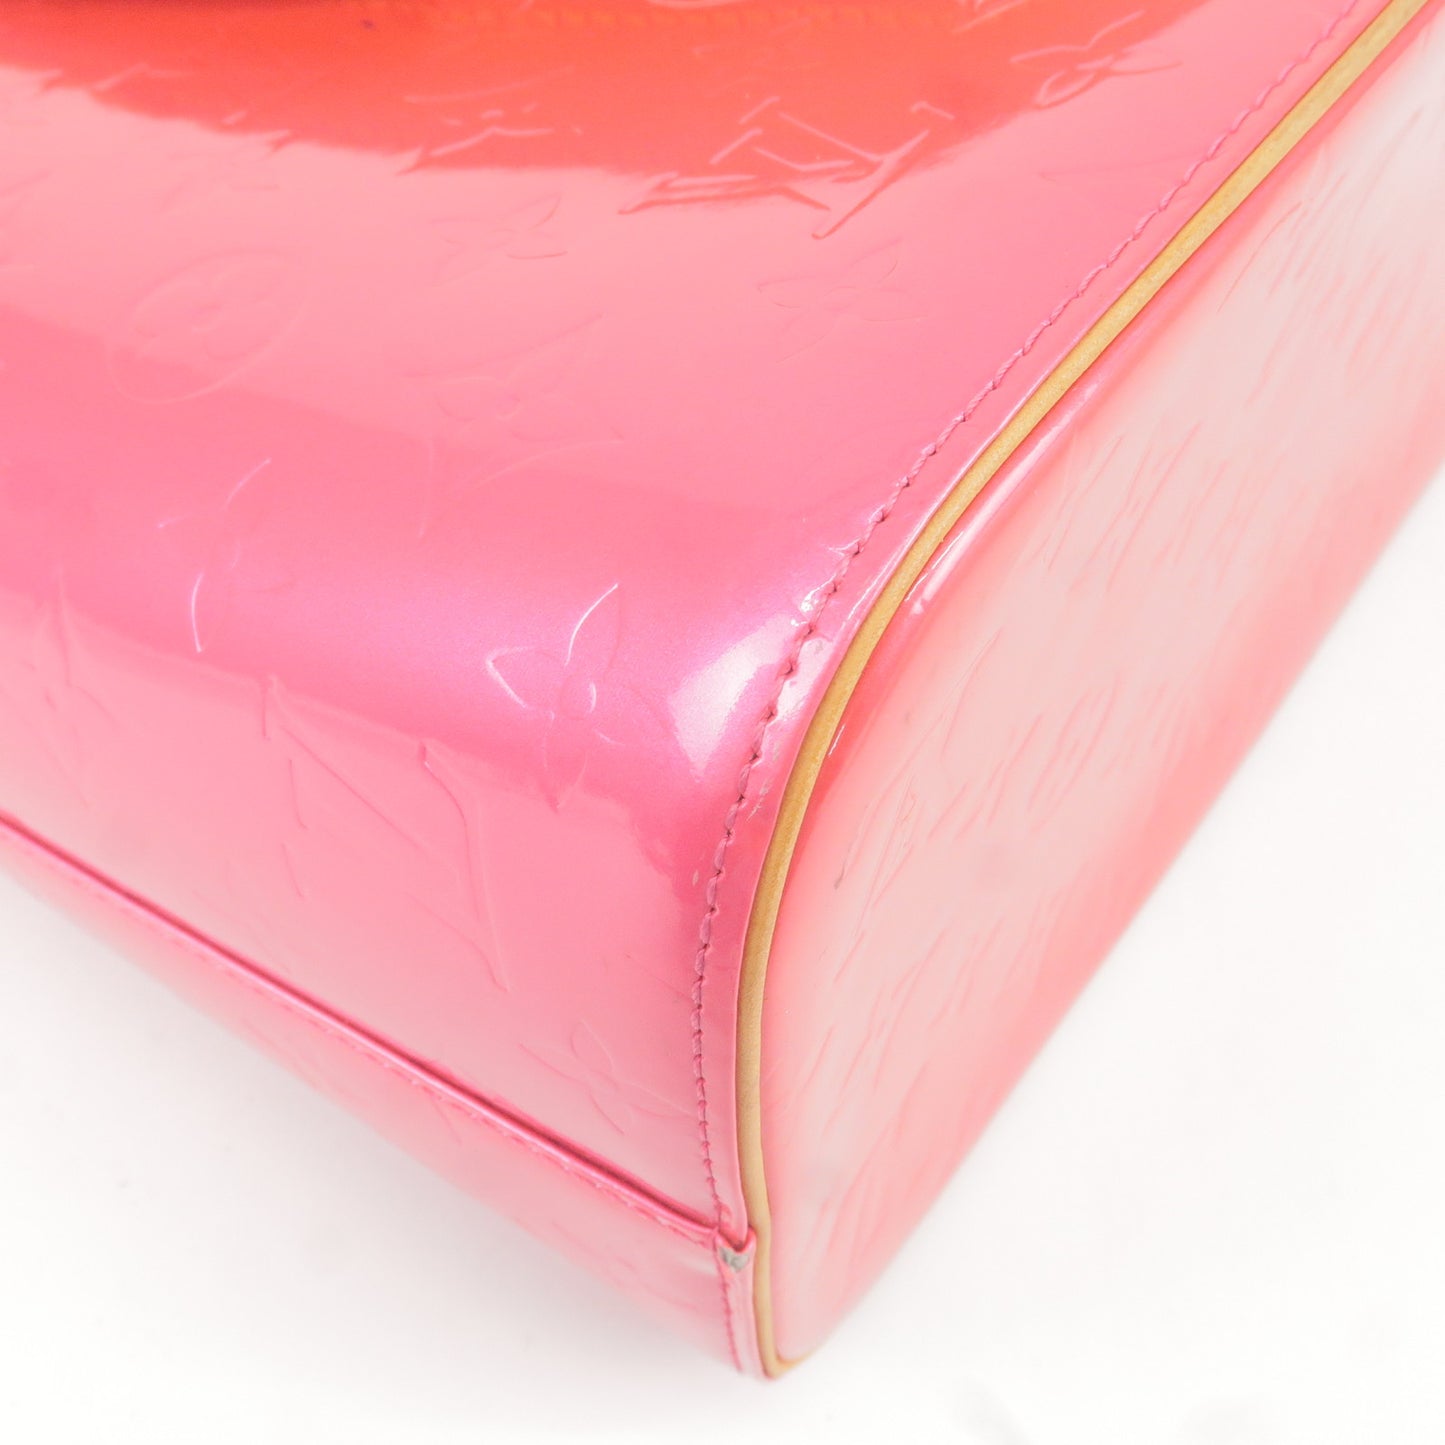 Louis Vuitton Fuchsia Pink Monoram Vernis Houston Zip Tote Bag 862095